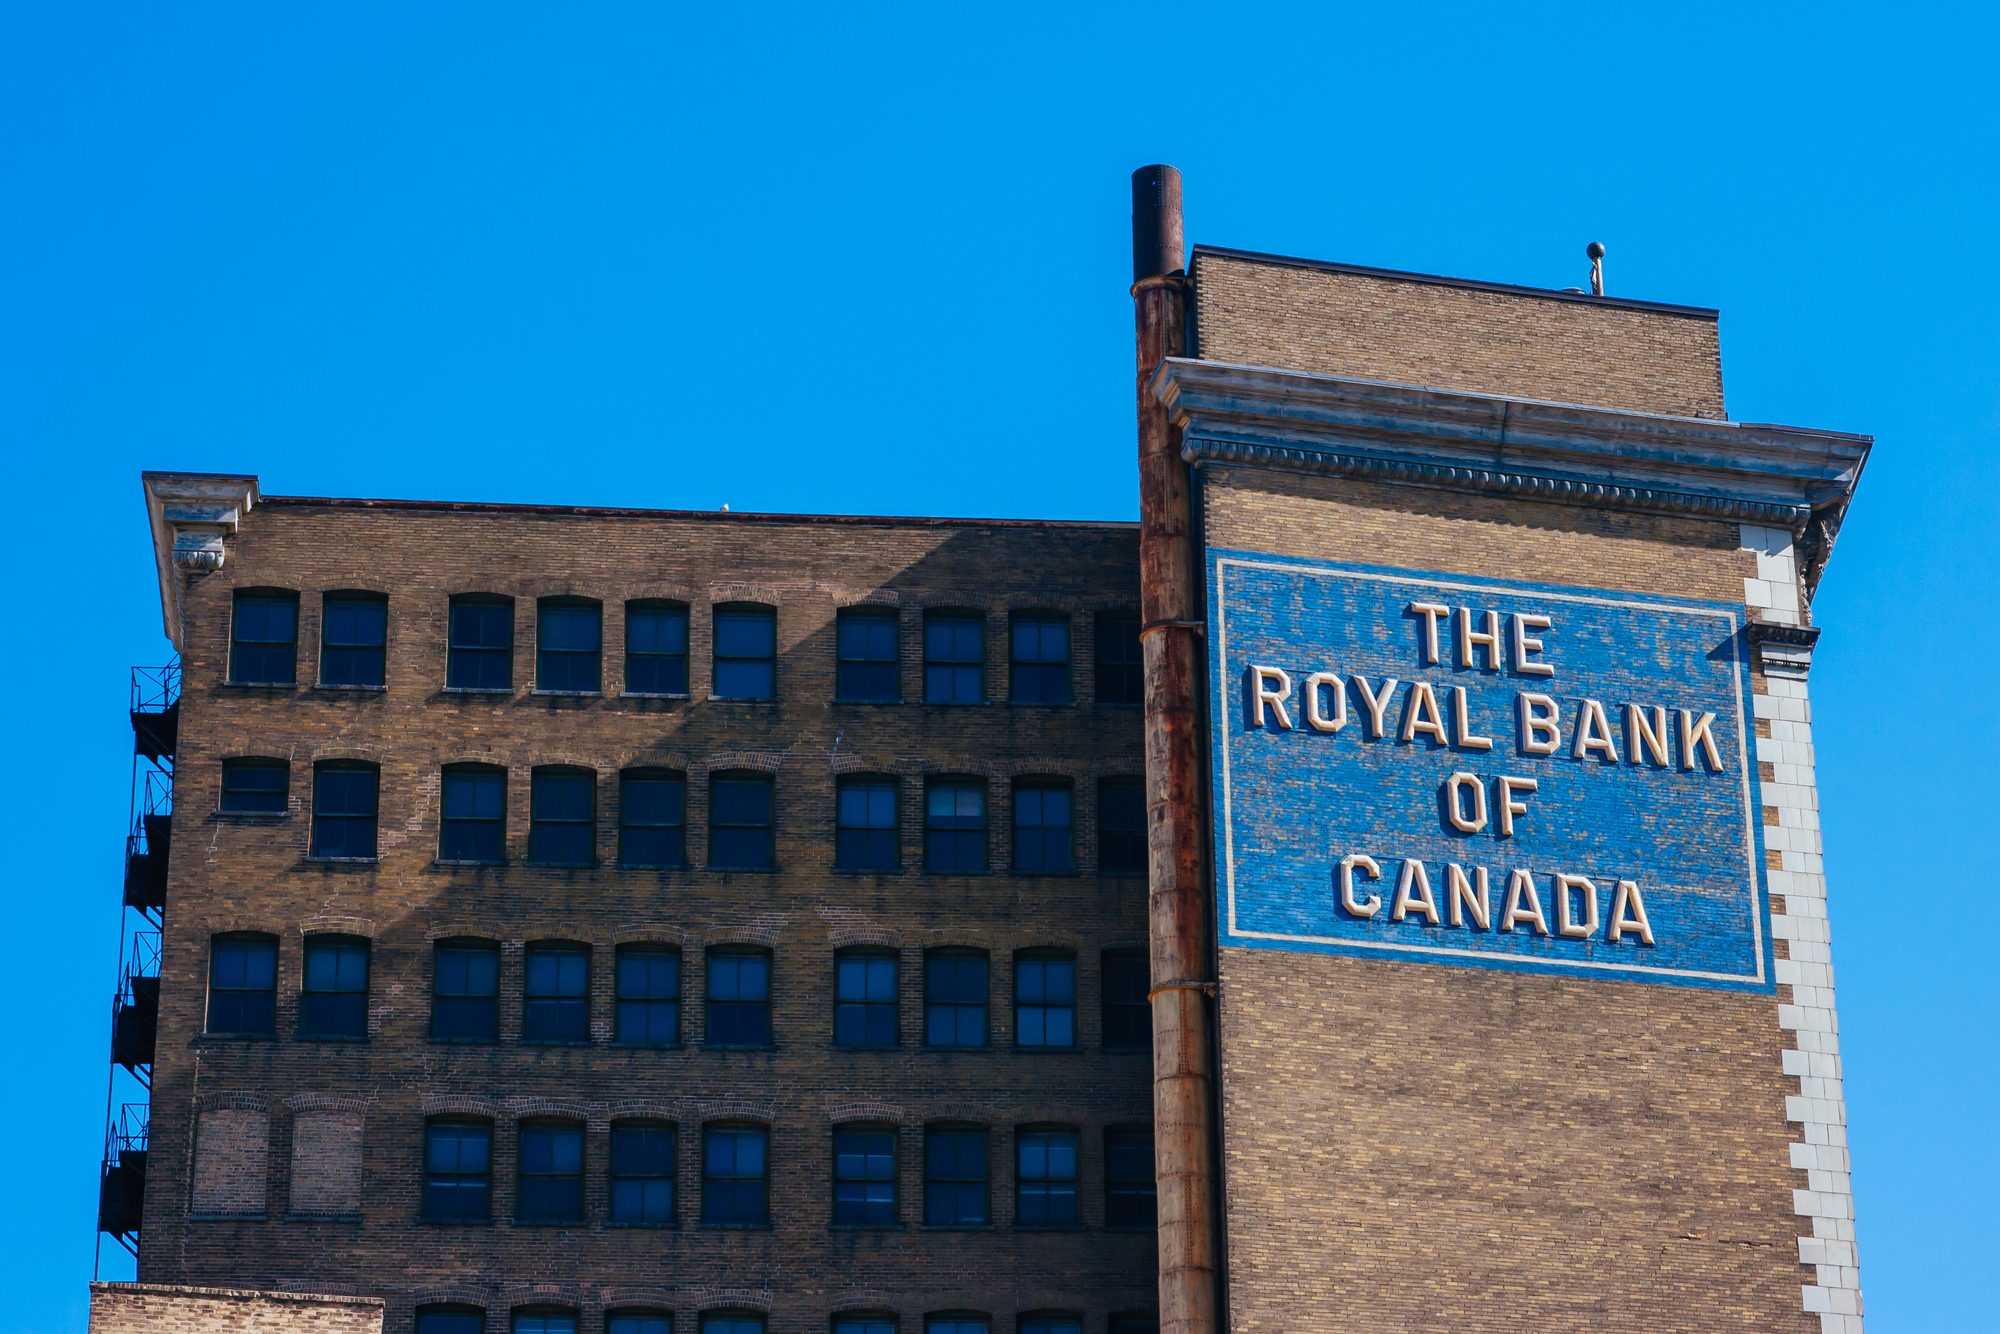 Royal Bank of Canada Building in Winnipeg